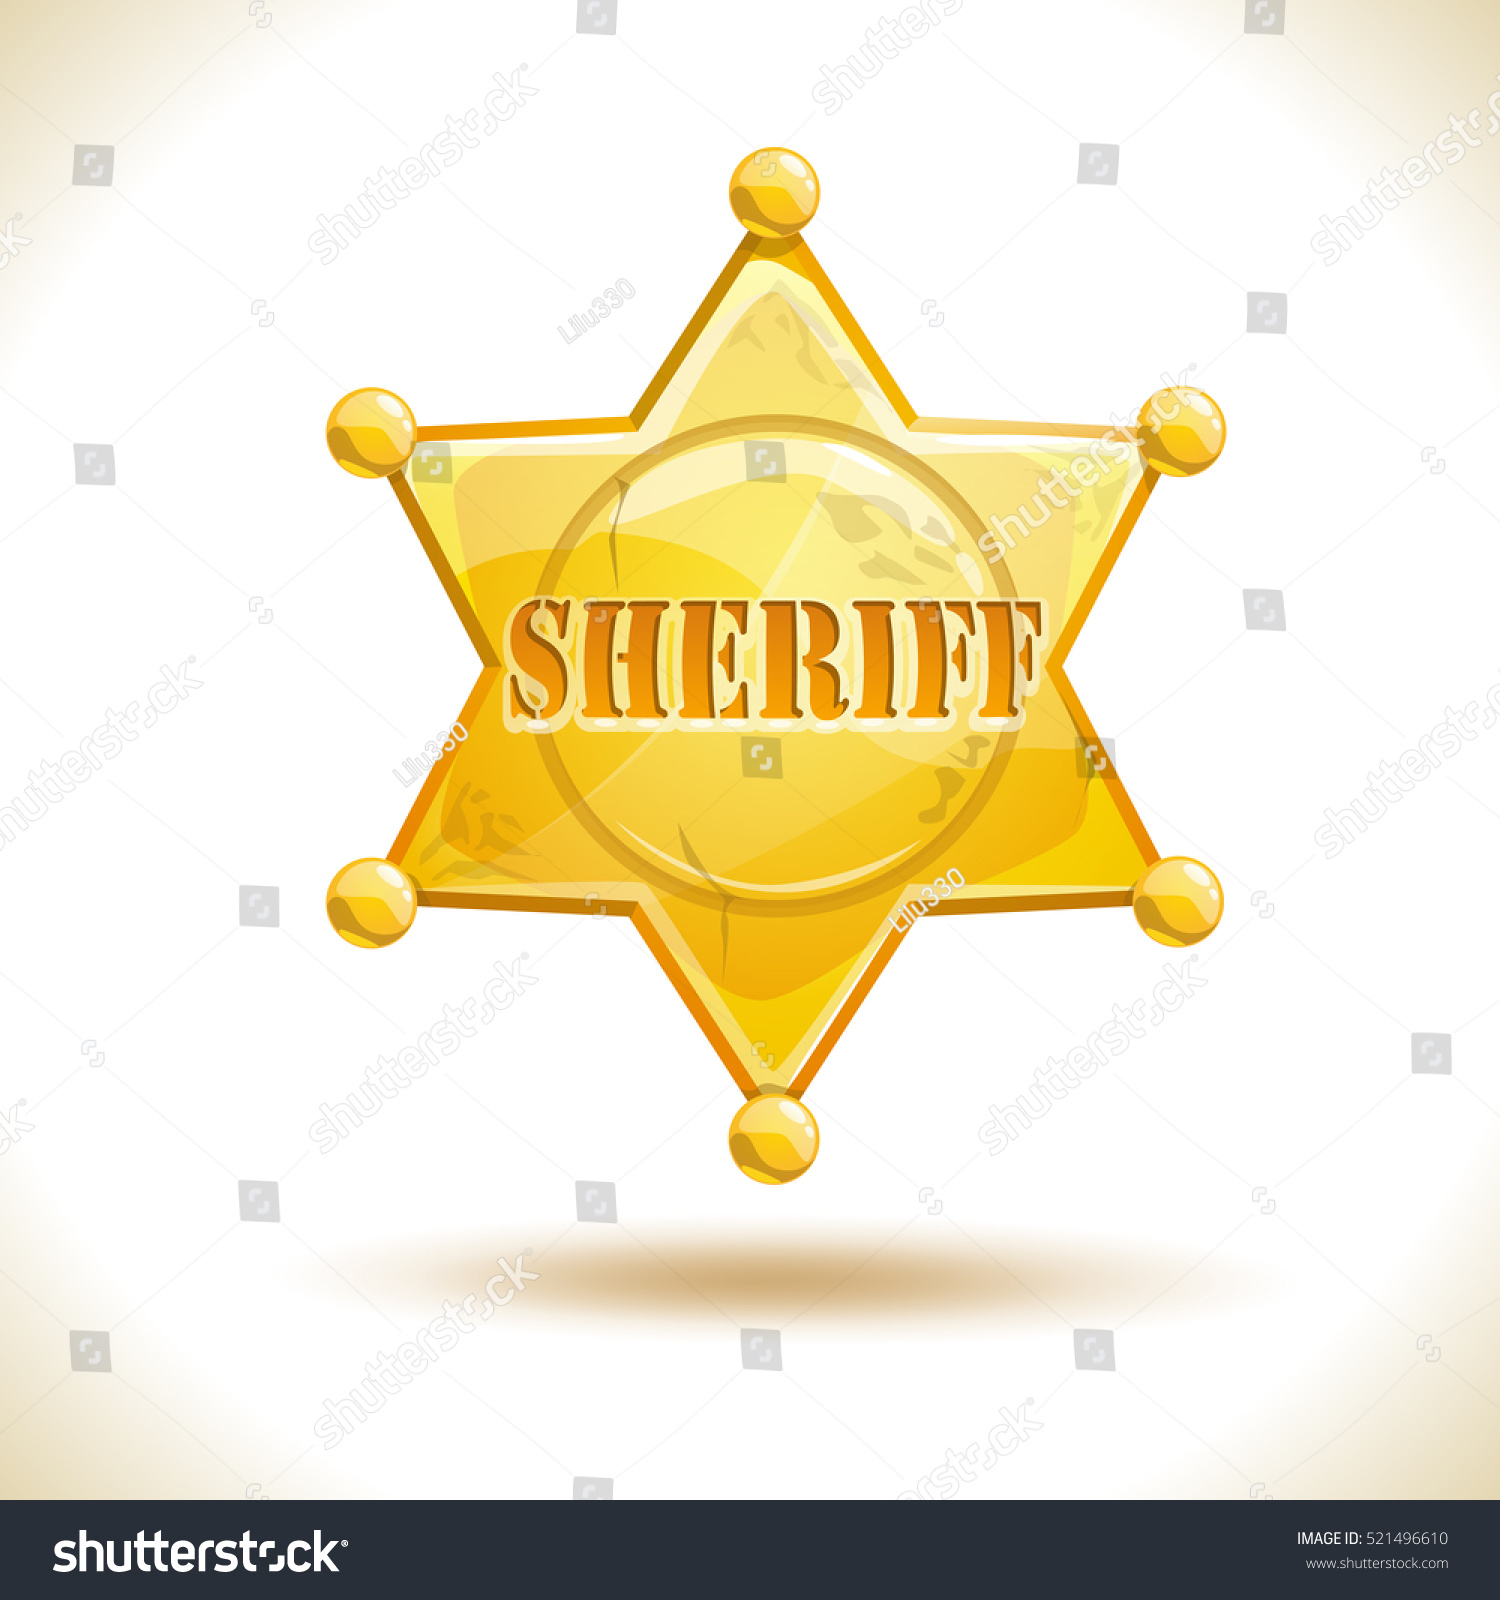 SVG of Golden hexagonal star icon, sheriff badge symbol. Vector illustration, isolated on white. svg